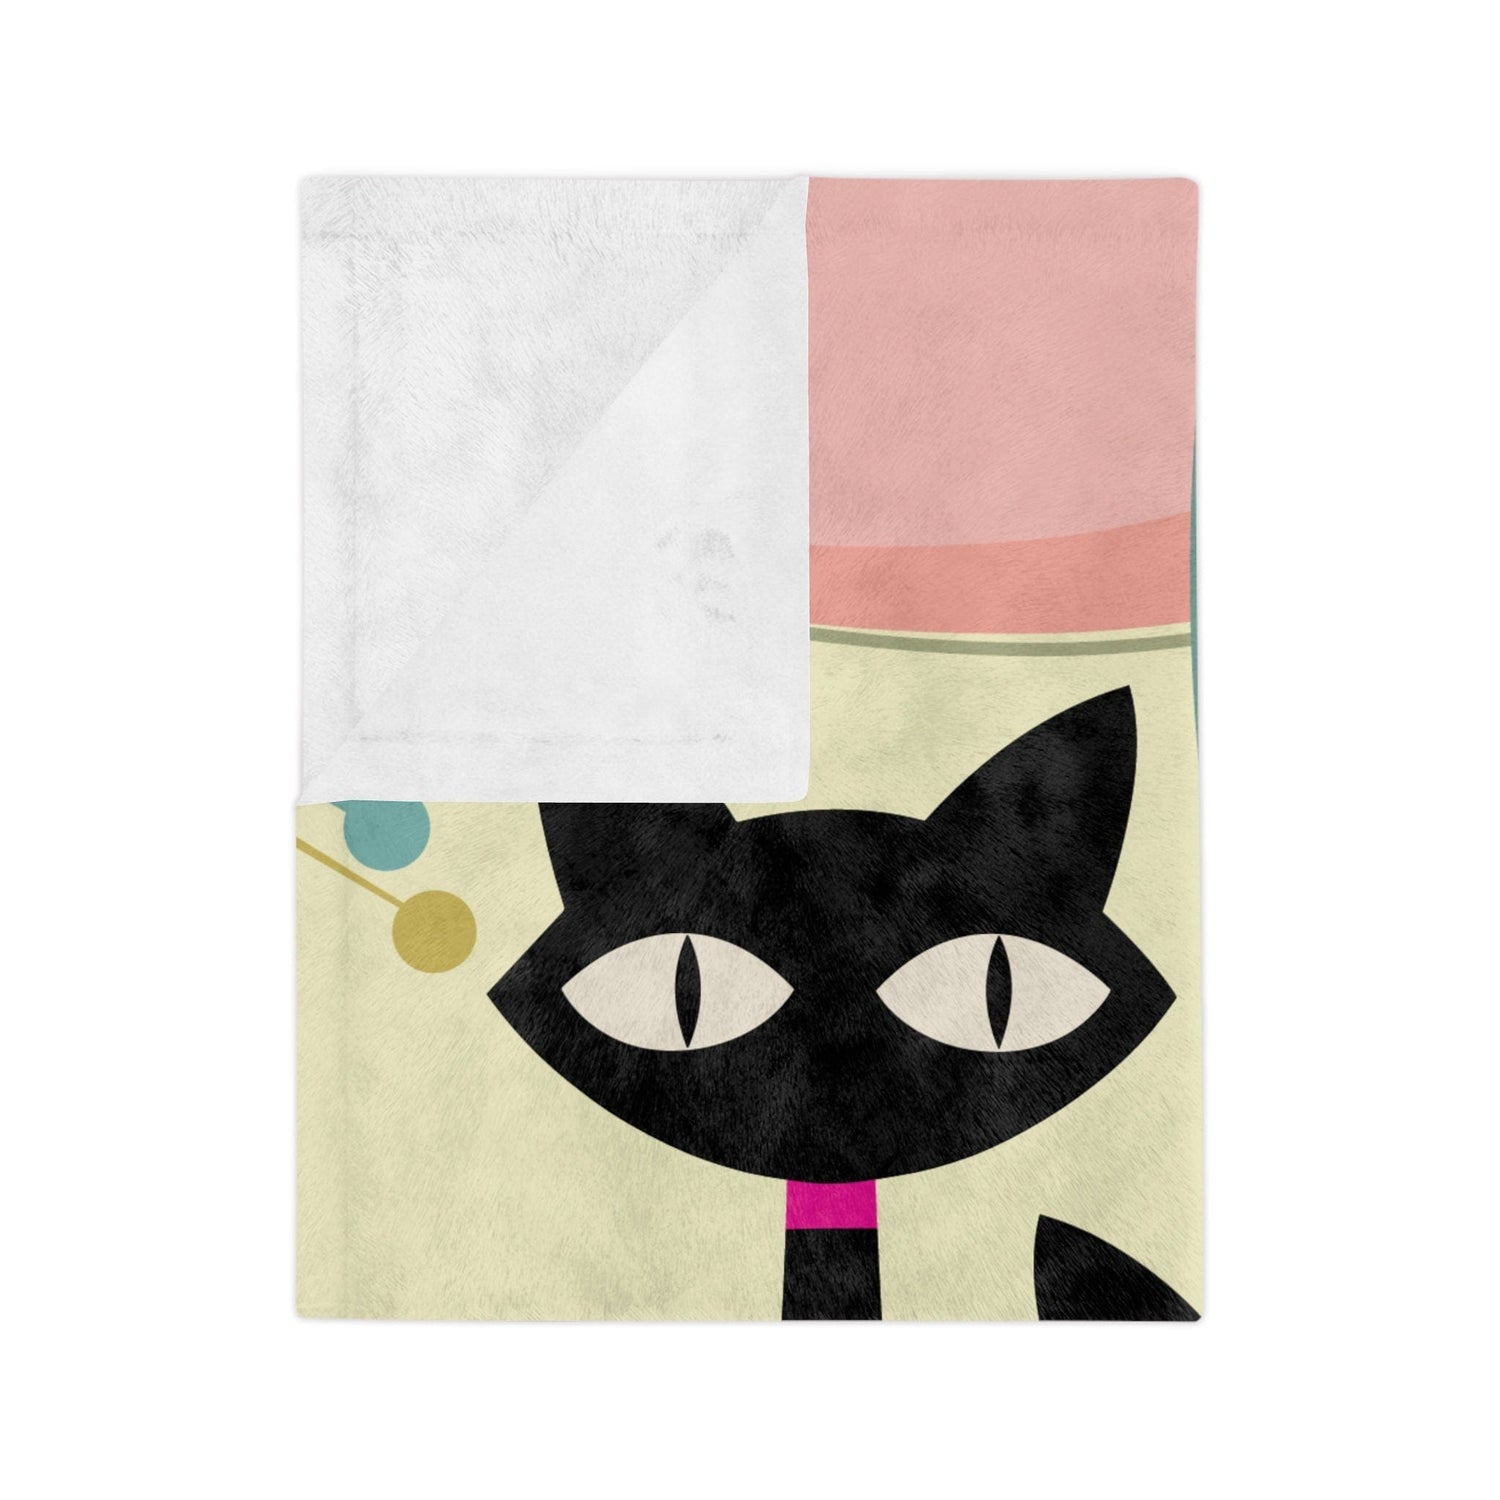 Kate McEnroe New York Atomic Cat Boomerang Starburst Minky Blanket, 1950s Retro Mod Teal, Pink, Cream Yellow Geometric Blanket, MCM Soft Plush Throw - 13429123Blankets18080693101626038050